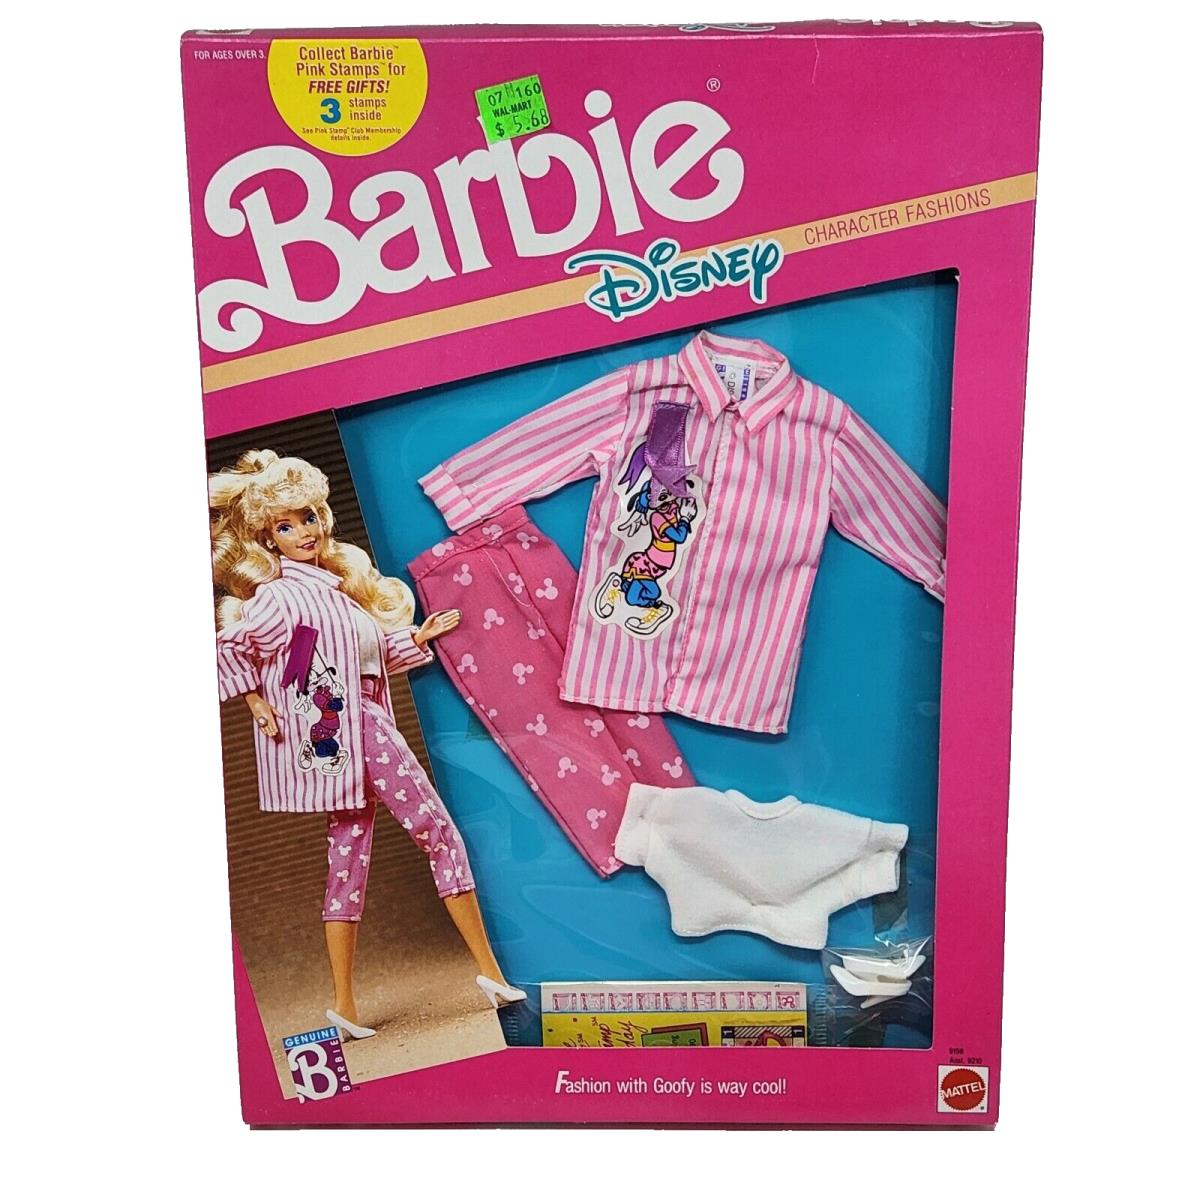 Vintage 1989 Mattel Barbie Disney Character Fashions Goofy 9198 Clothing